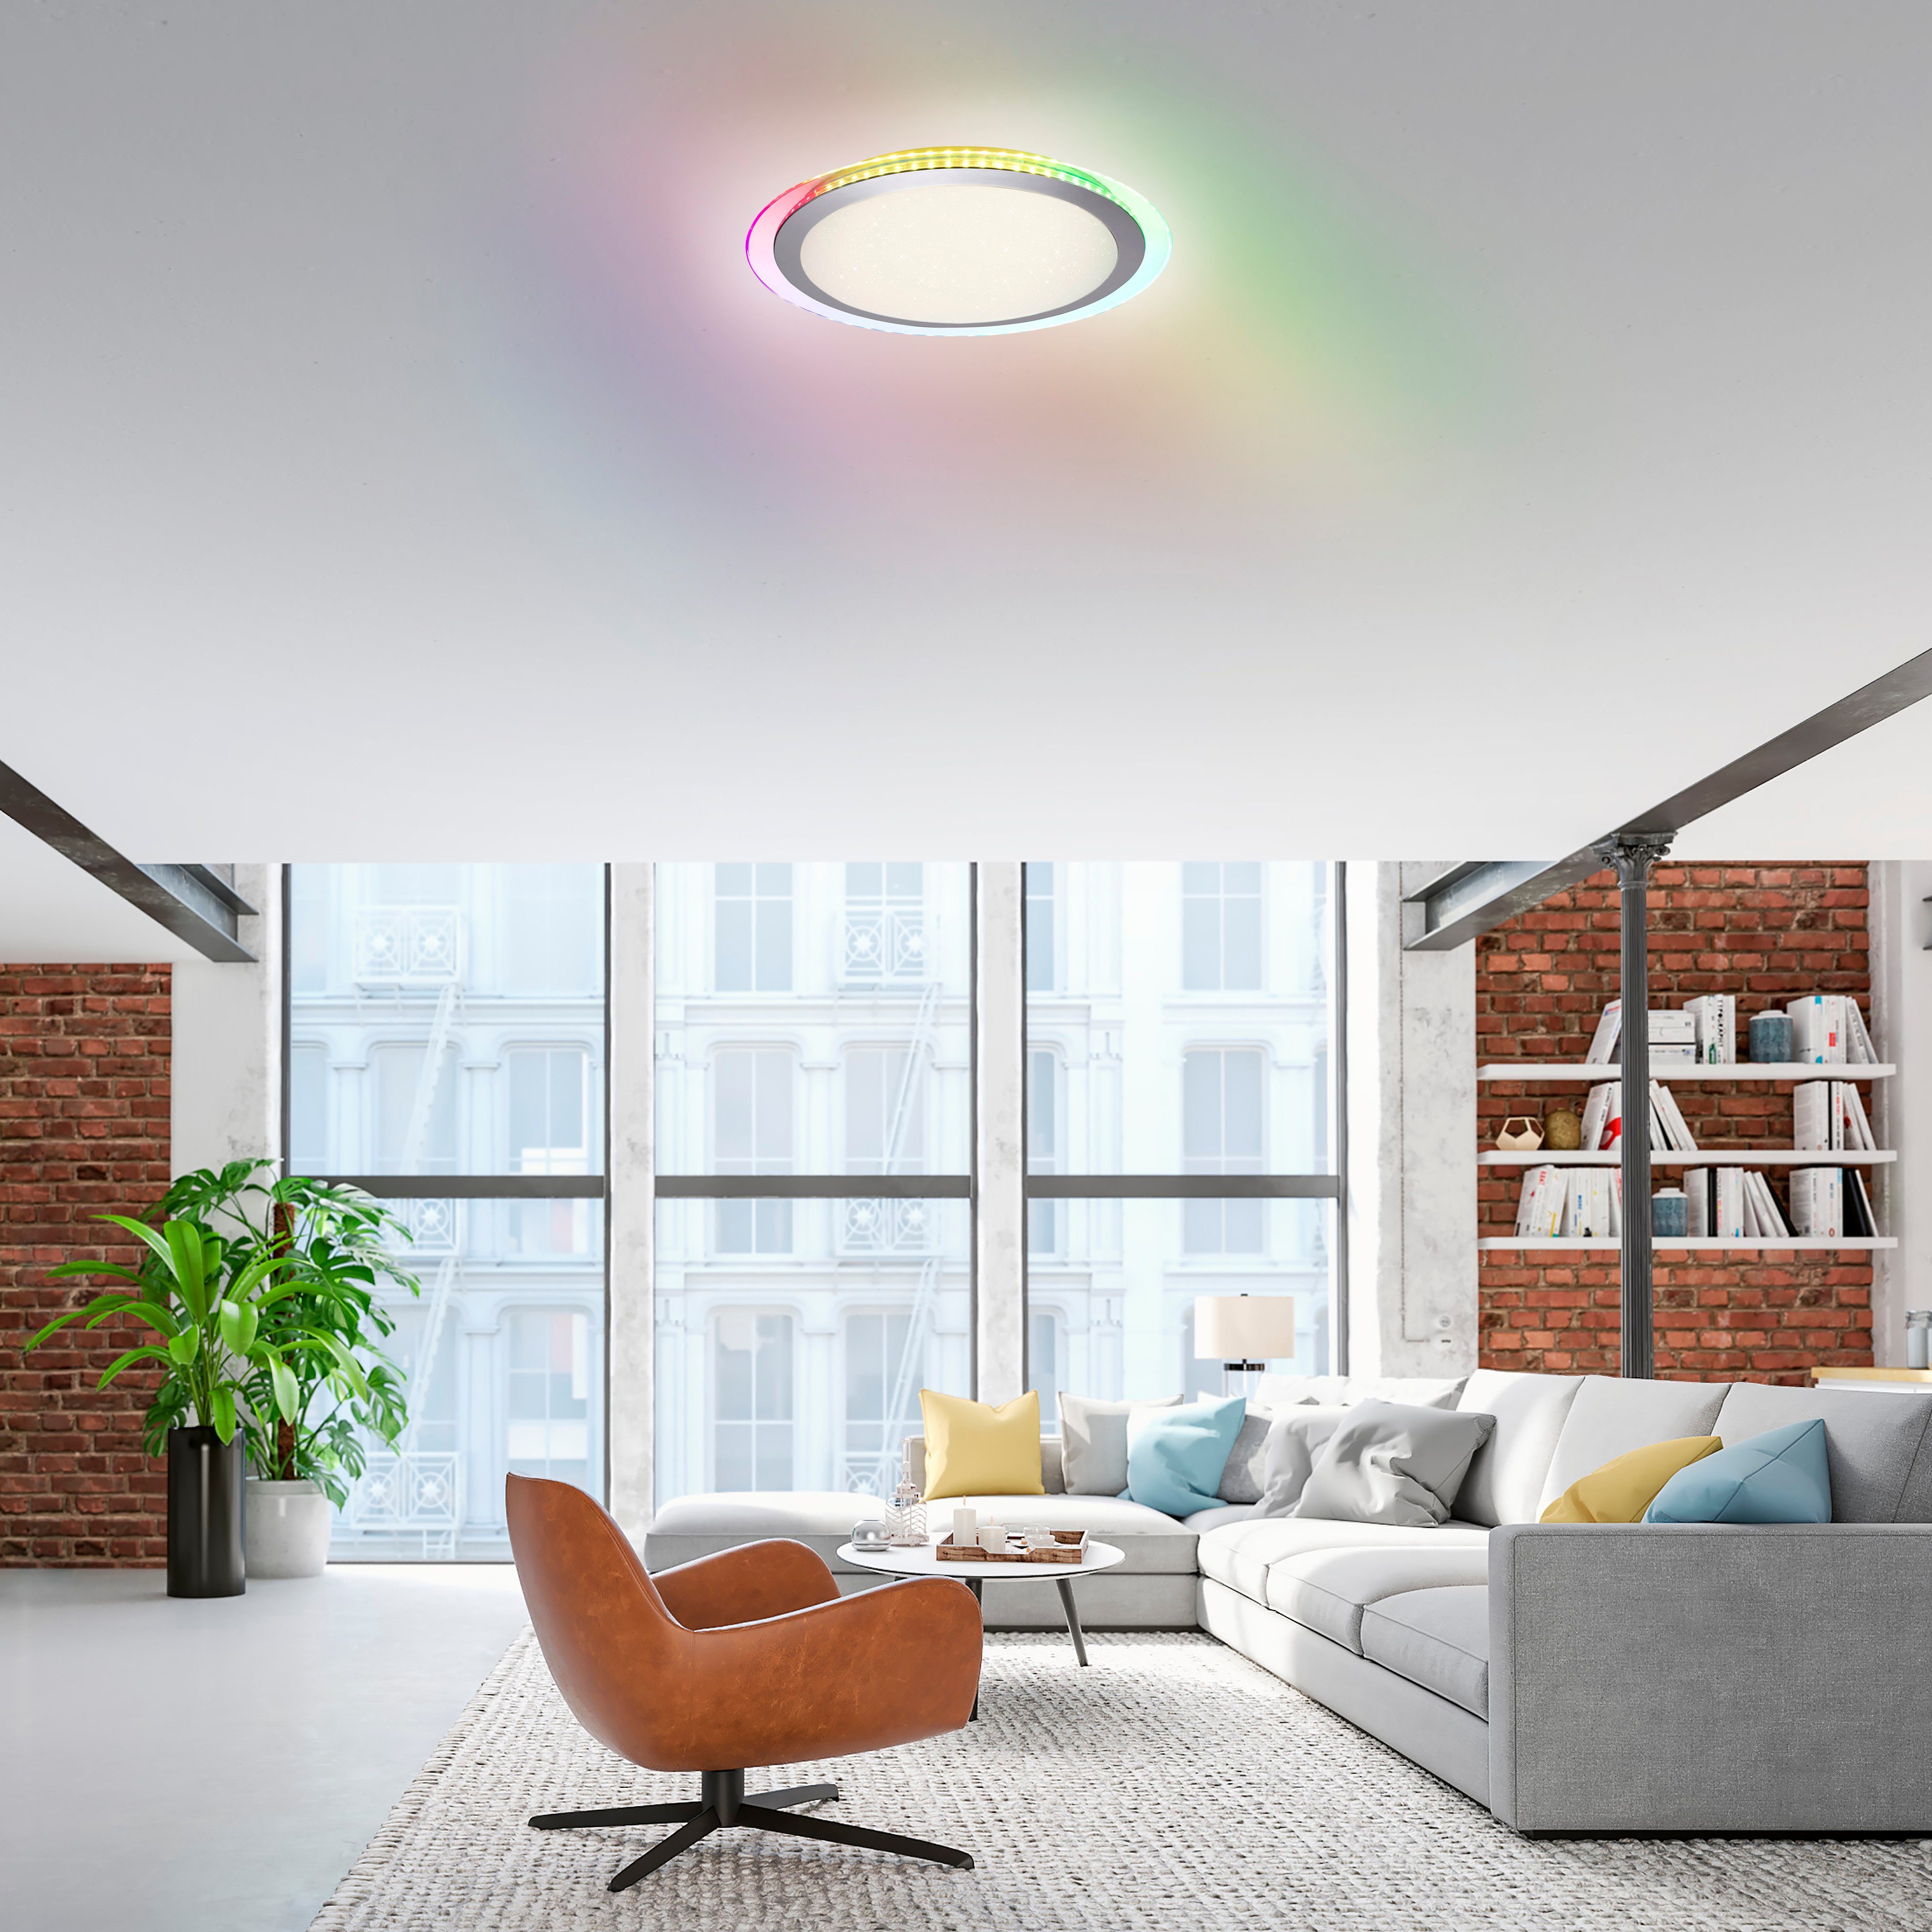 warmweiß LED LED, integriert, über kaltweiß, Deckenleuchte inkl. RGB-Rainbow, CYBA, dimmbar, fest Direkt Fernbedienung, - Infrarot Leuchten CCT -